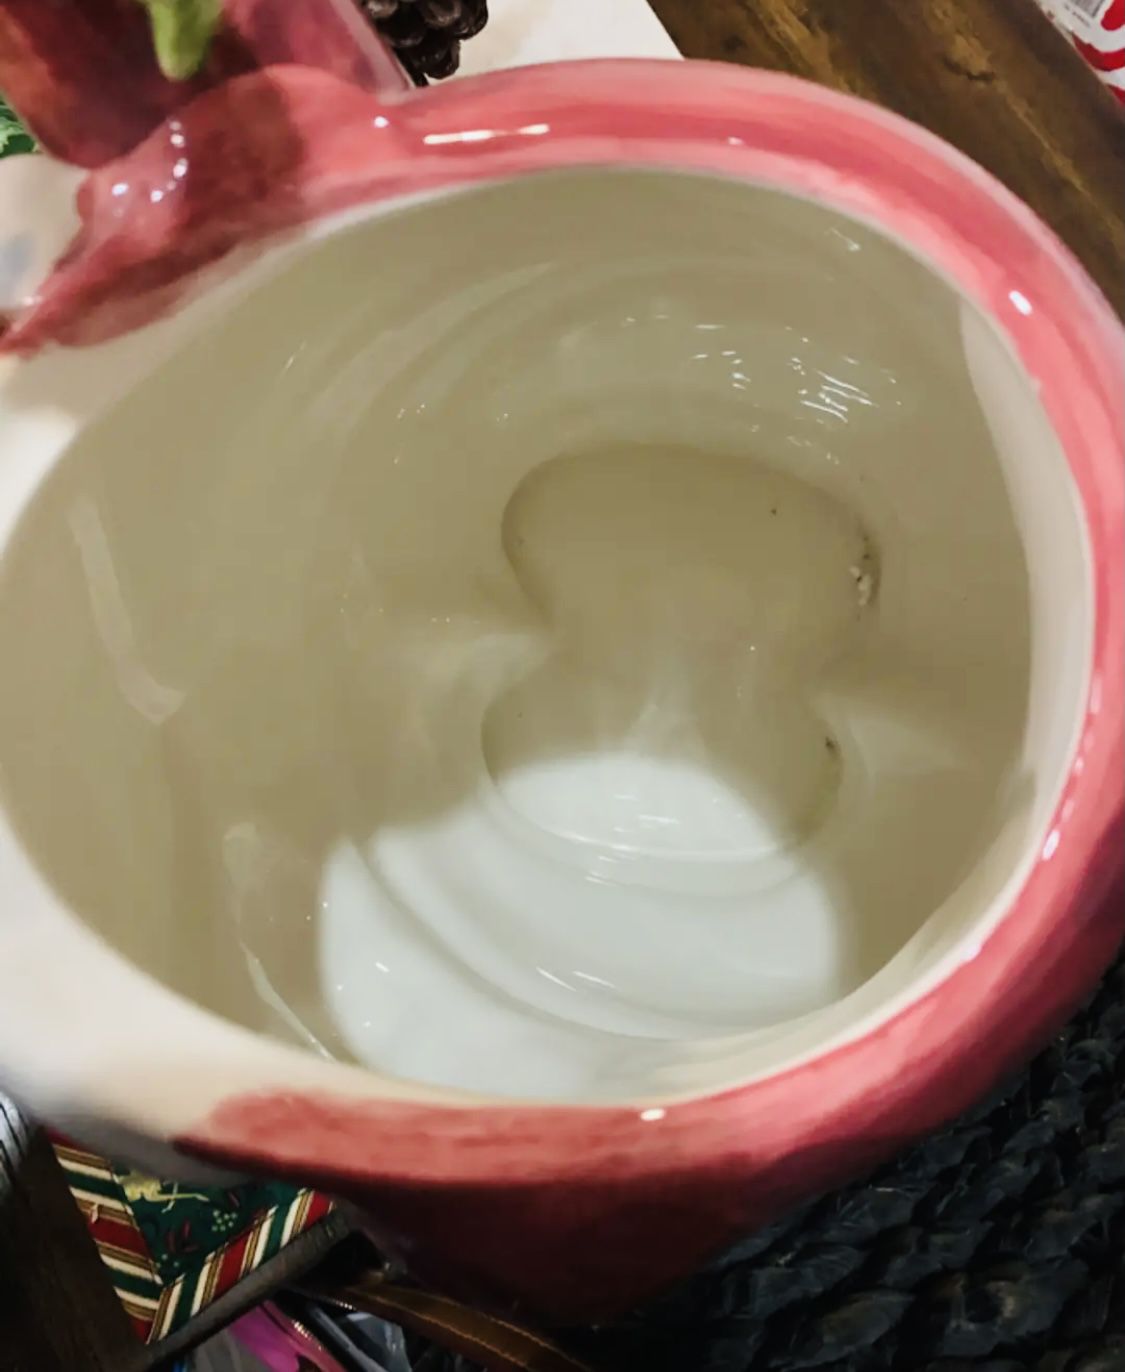 Santa Ceramic Cookie Jar